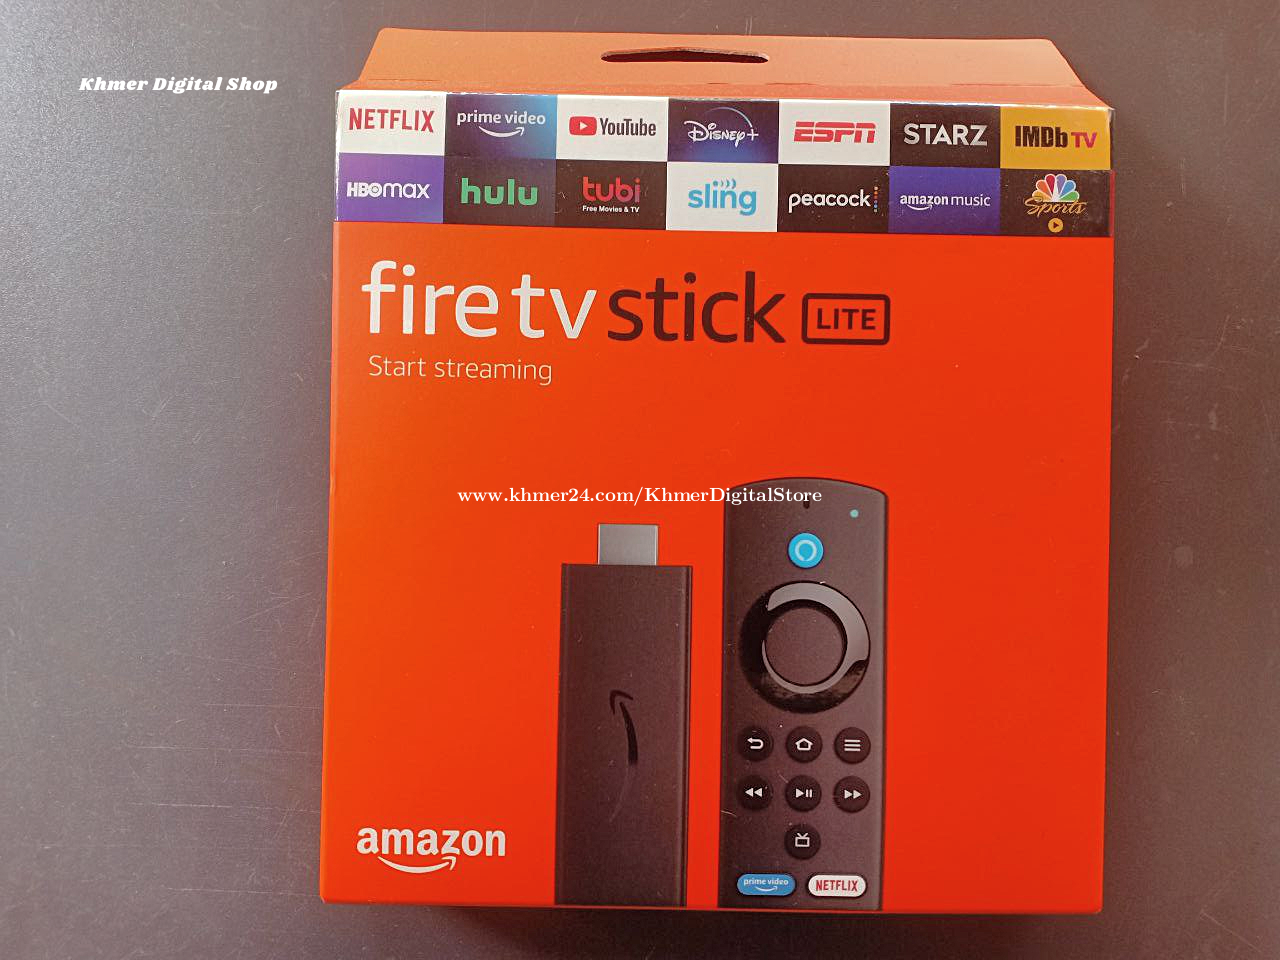 Fire TV Stick Lite with Alexa Voice Remote Lite (no TV controls)